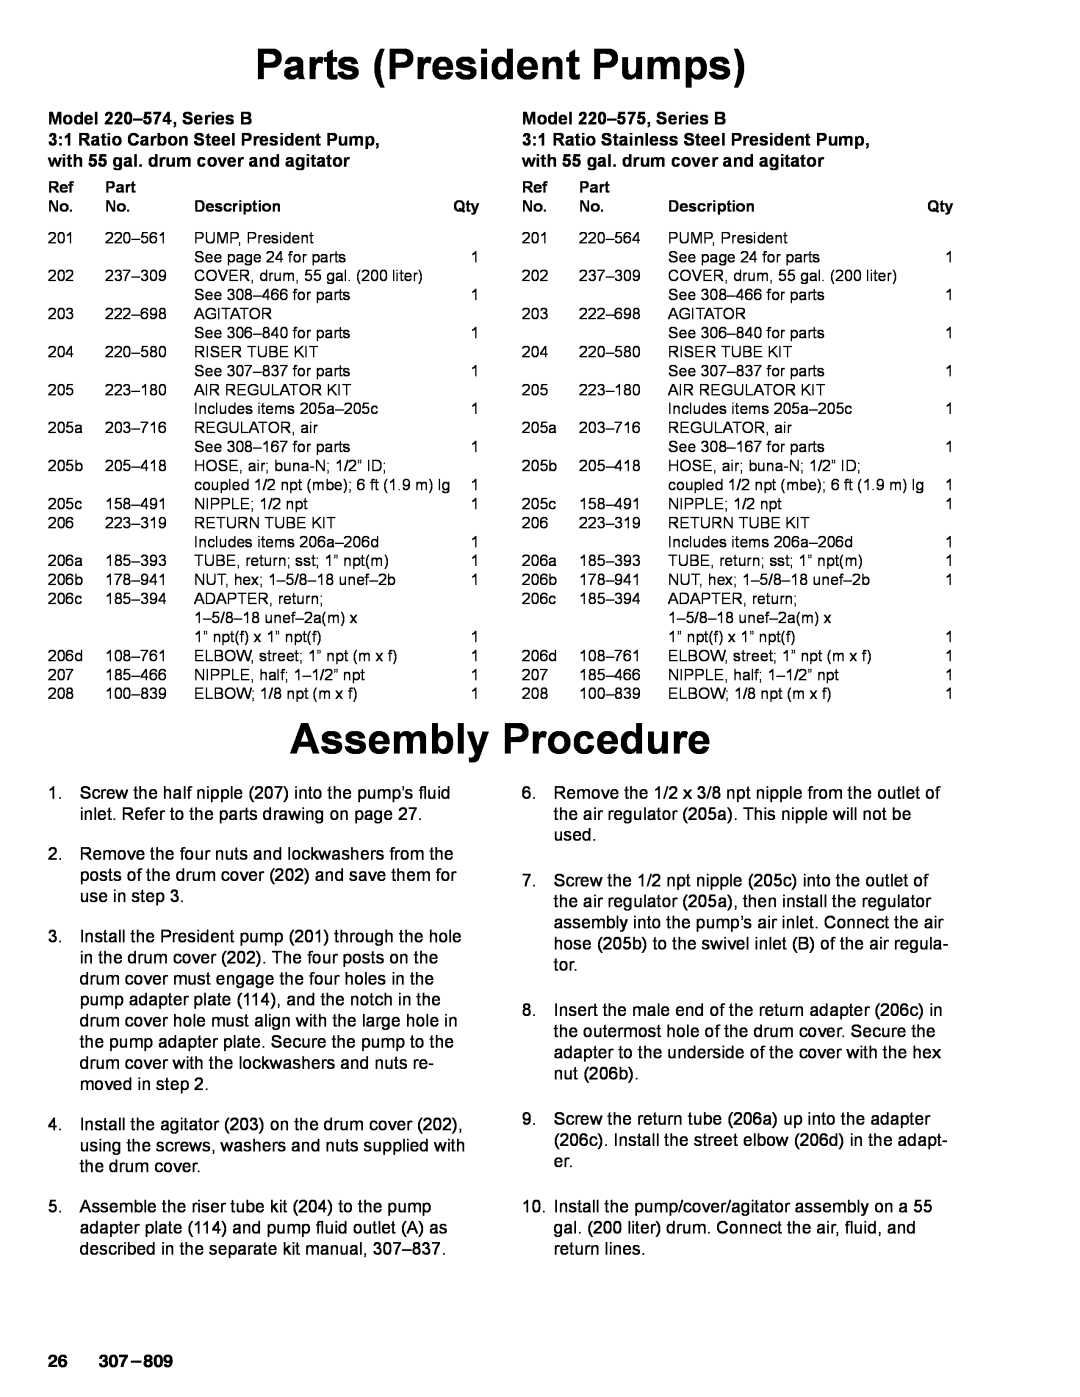 Graco 220-569 manual Assembly Procedure, Model 220-574,Series B, Model 220-575,Series B, Parts President Pumps 